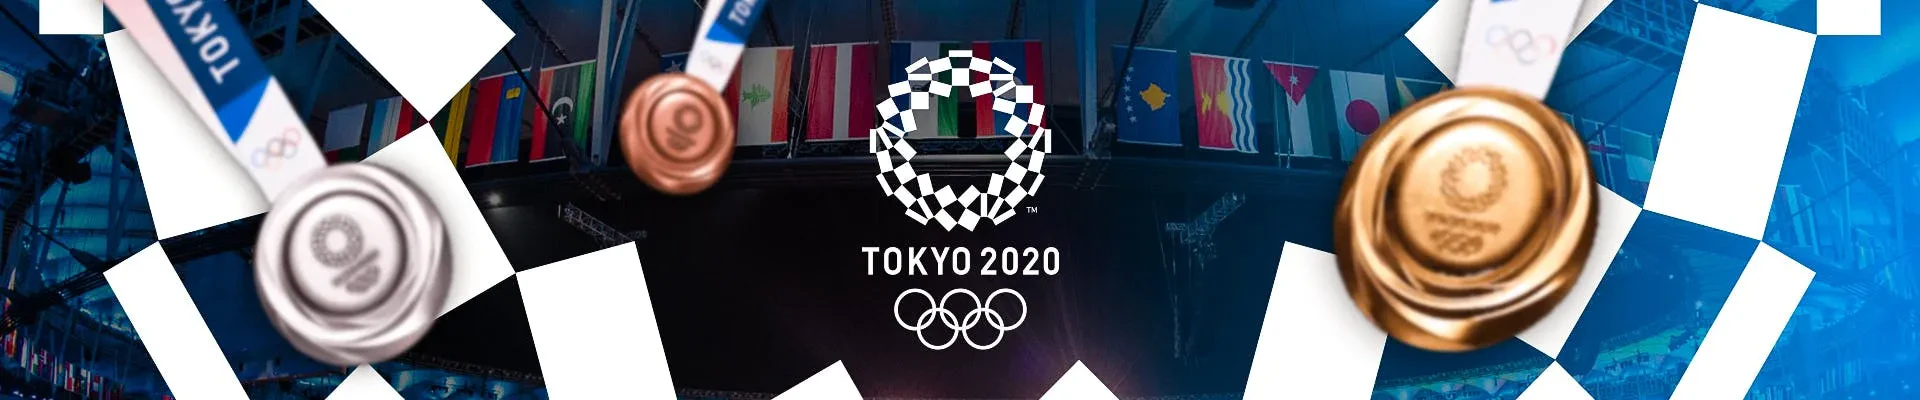 Tokyo 2020 header